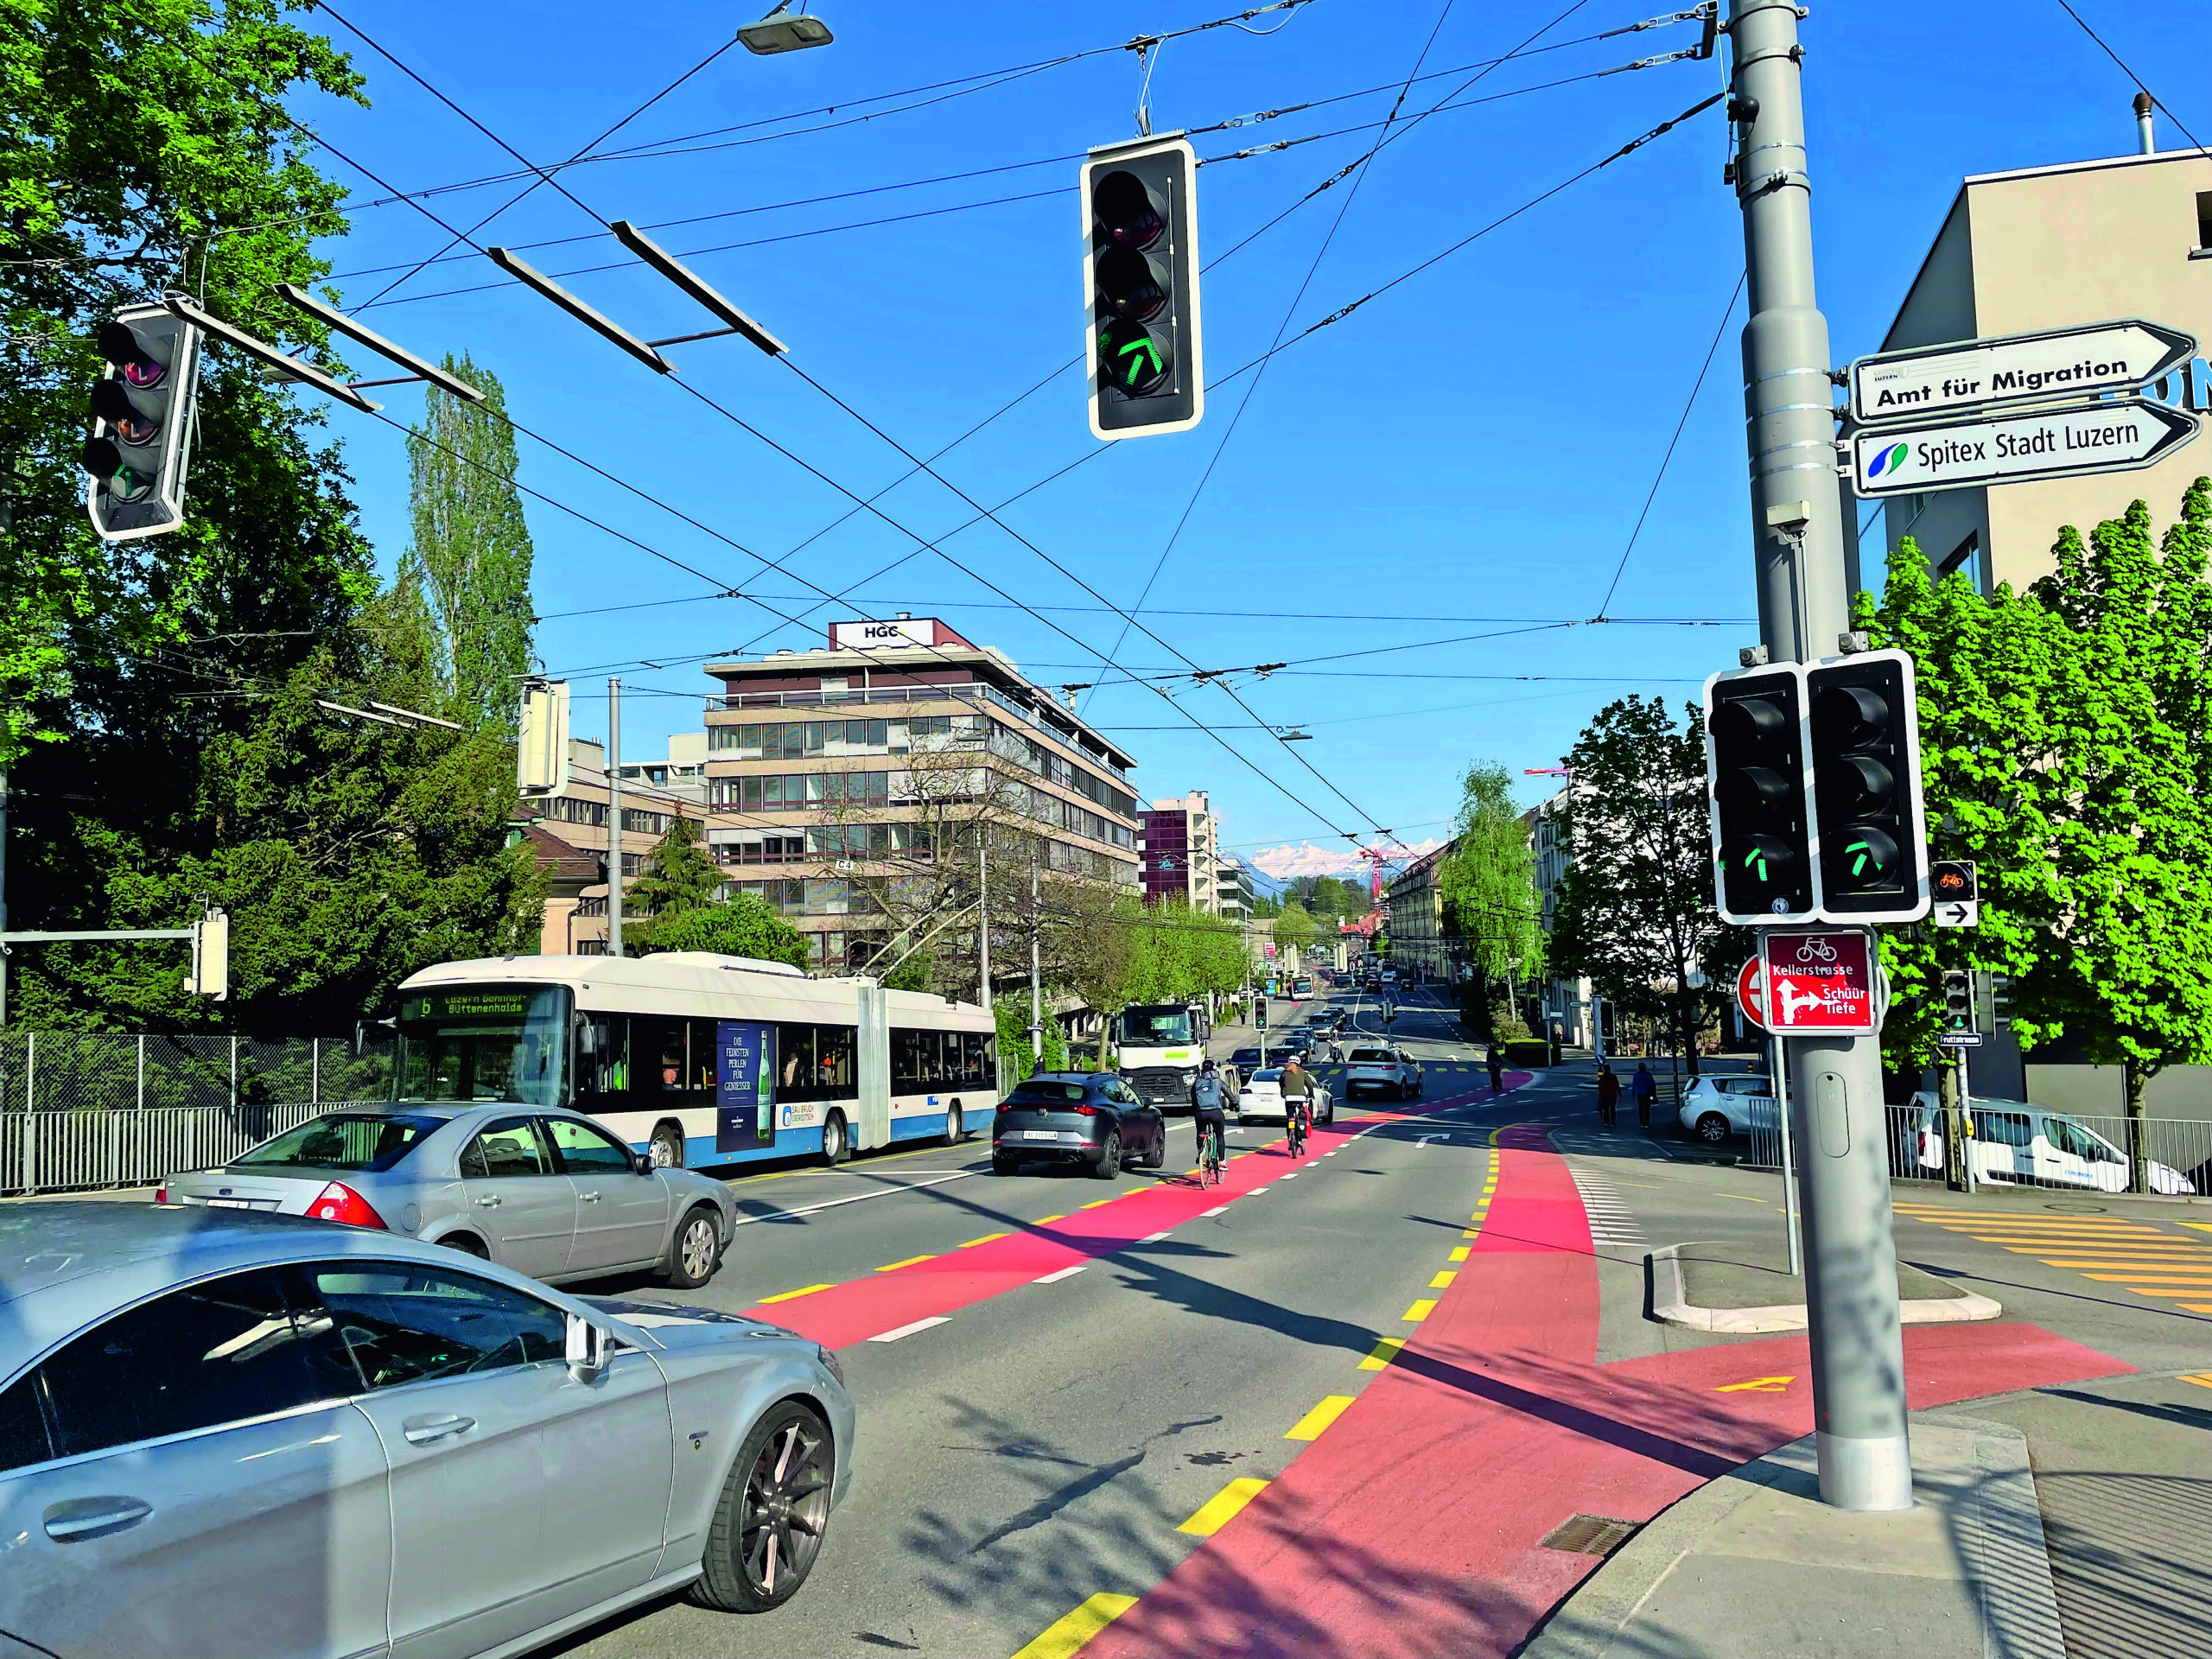 Smart traffic lights allow traffic to flow better